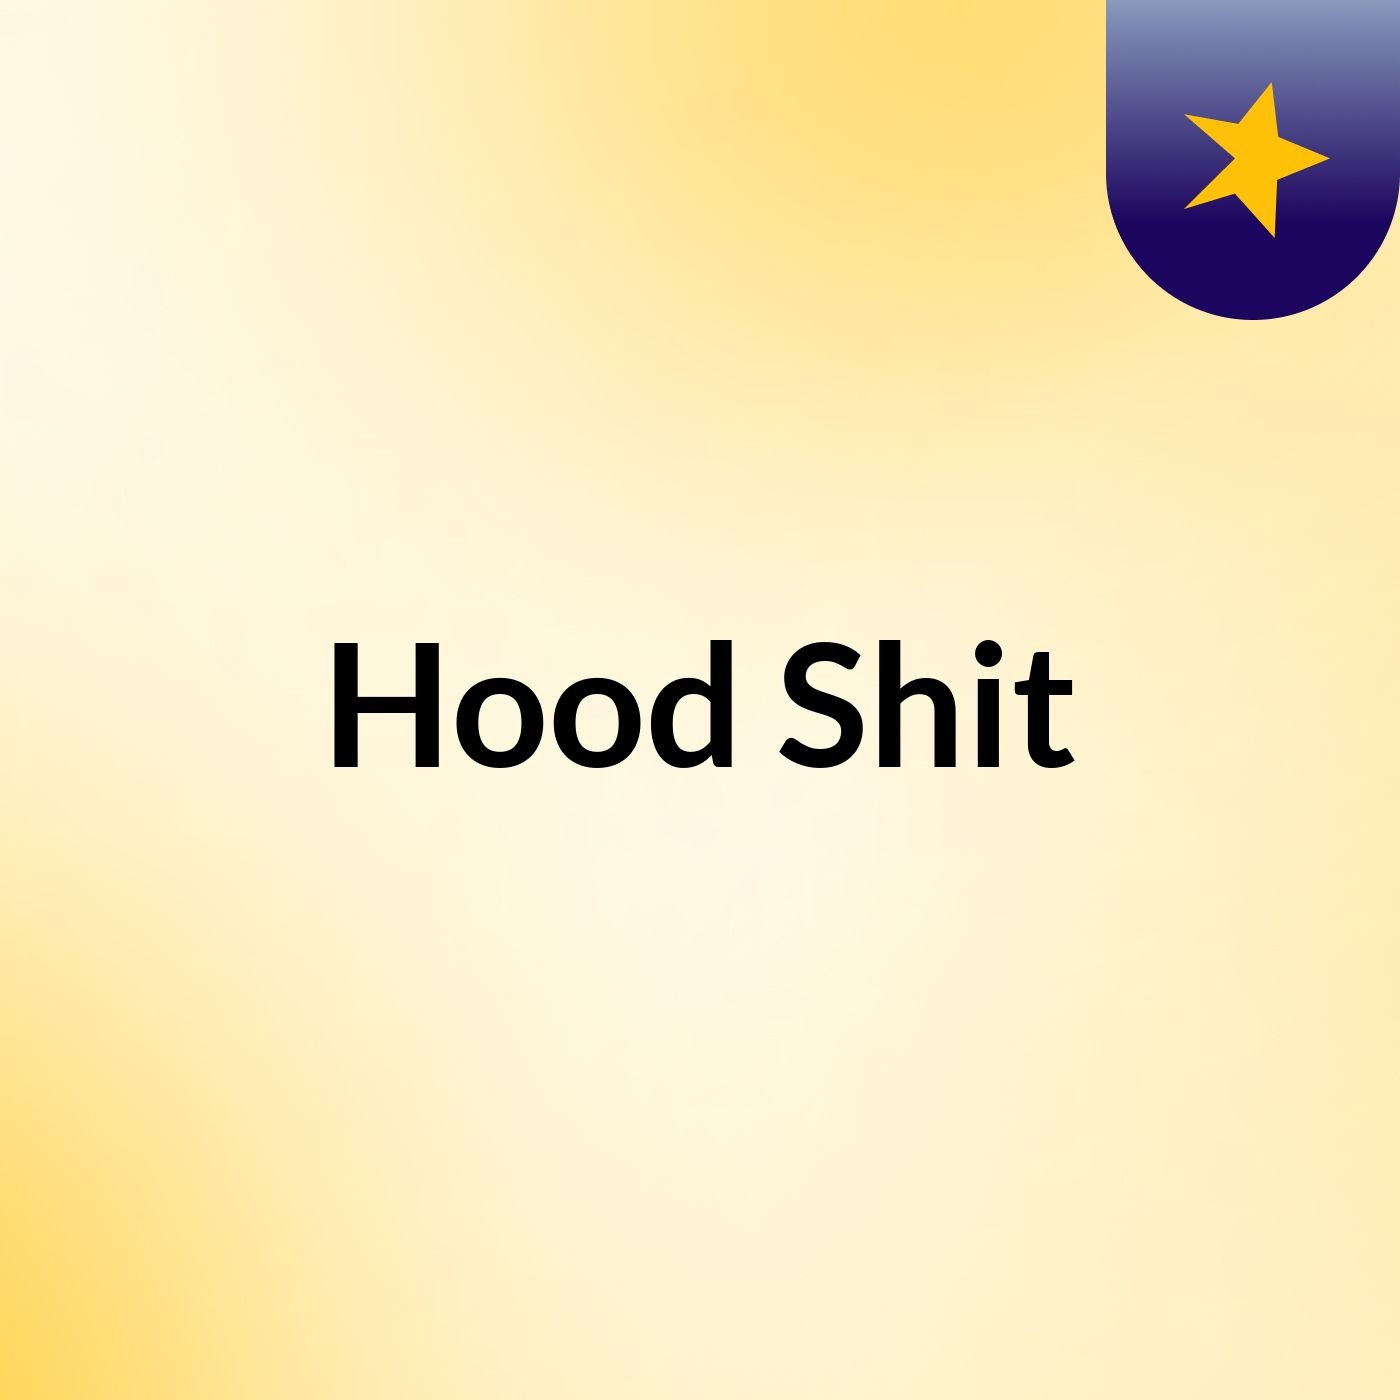 Hood Shit